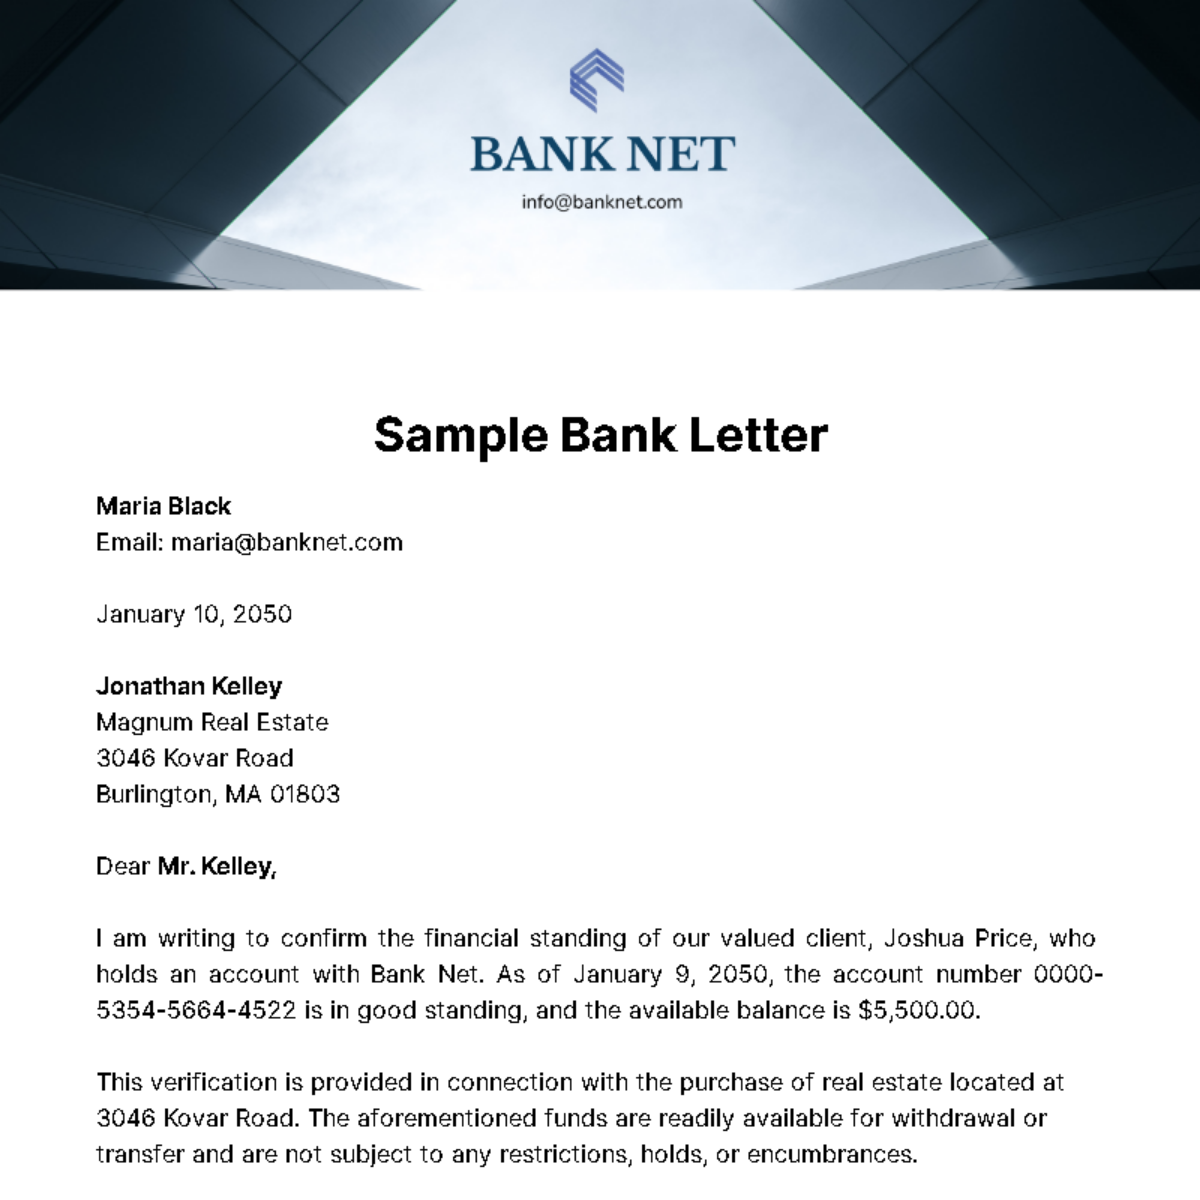 Sample Bank Letter  Template